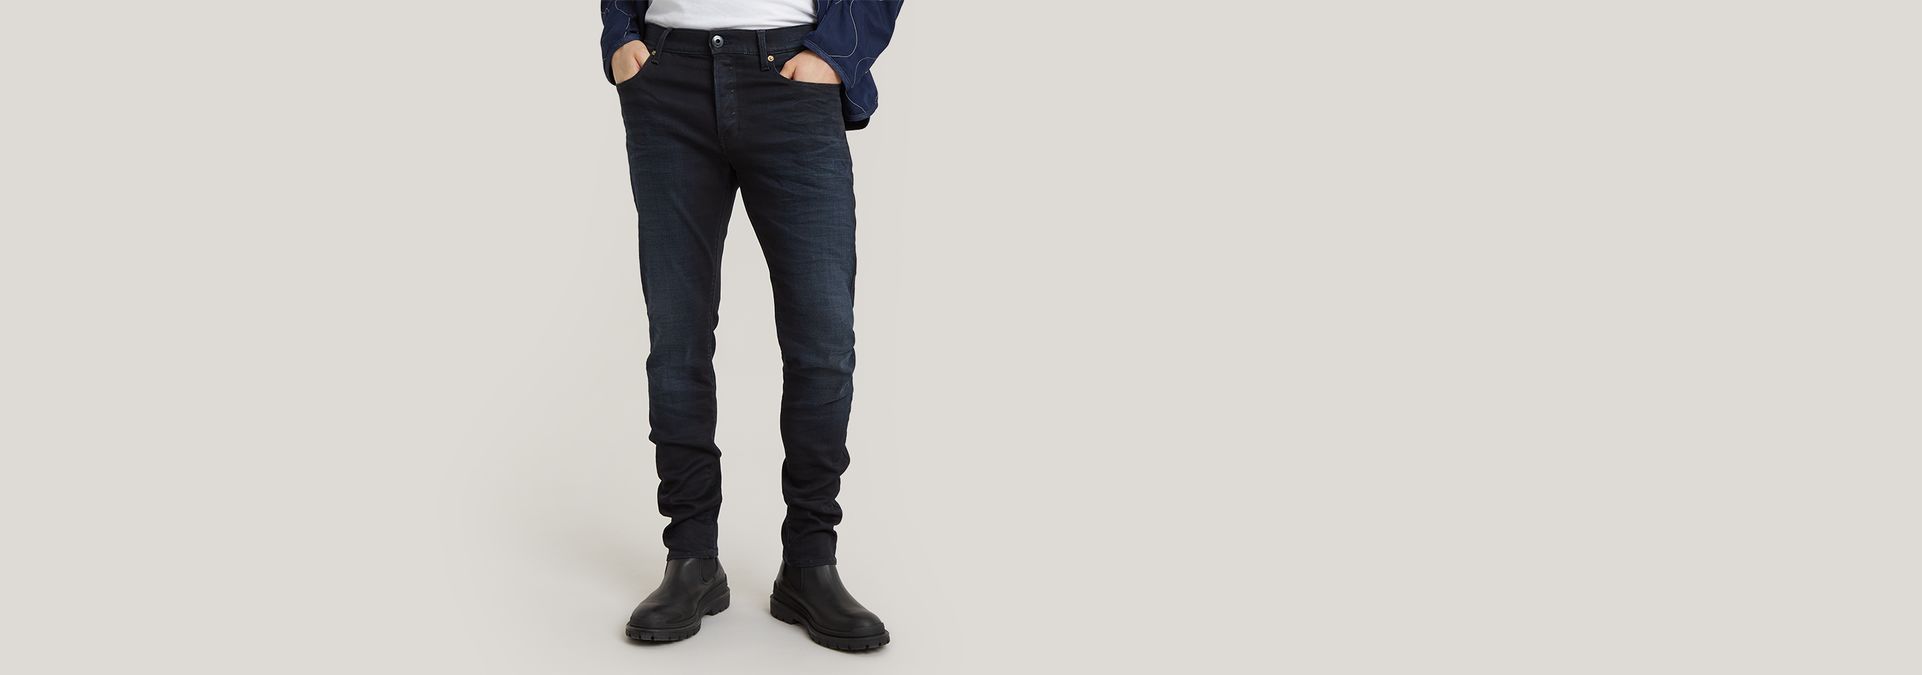 Premium 3301 Slim Selvedge Jeans | Dark blue | G-Star RAW® US